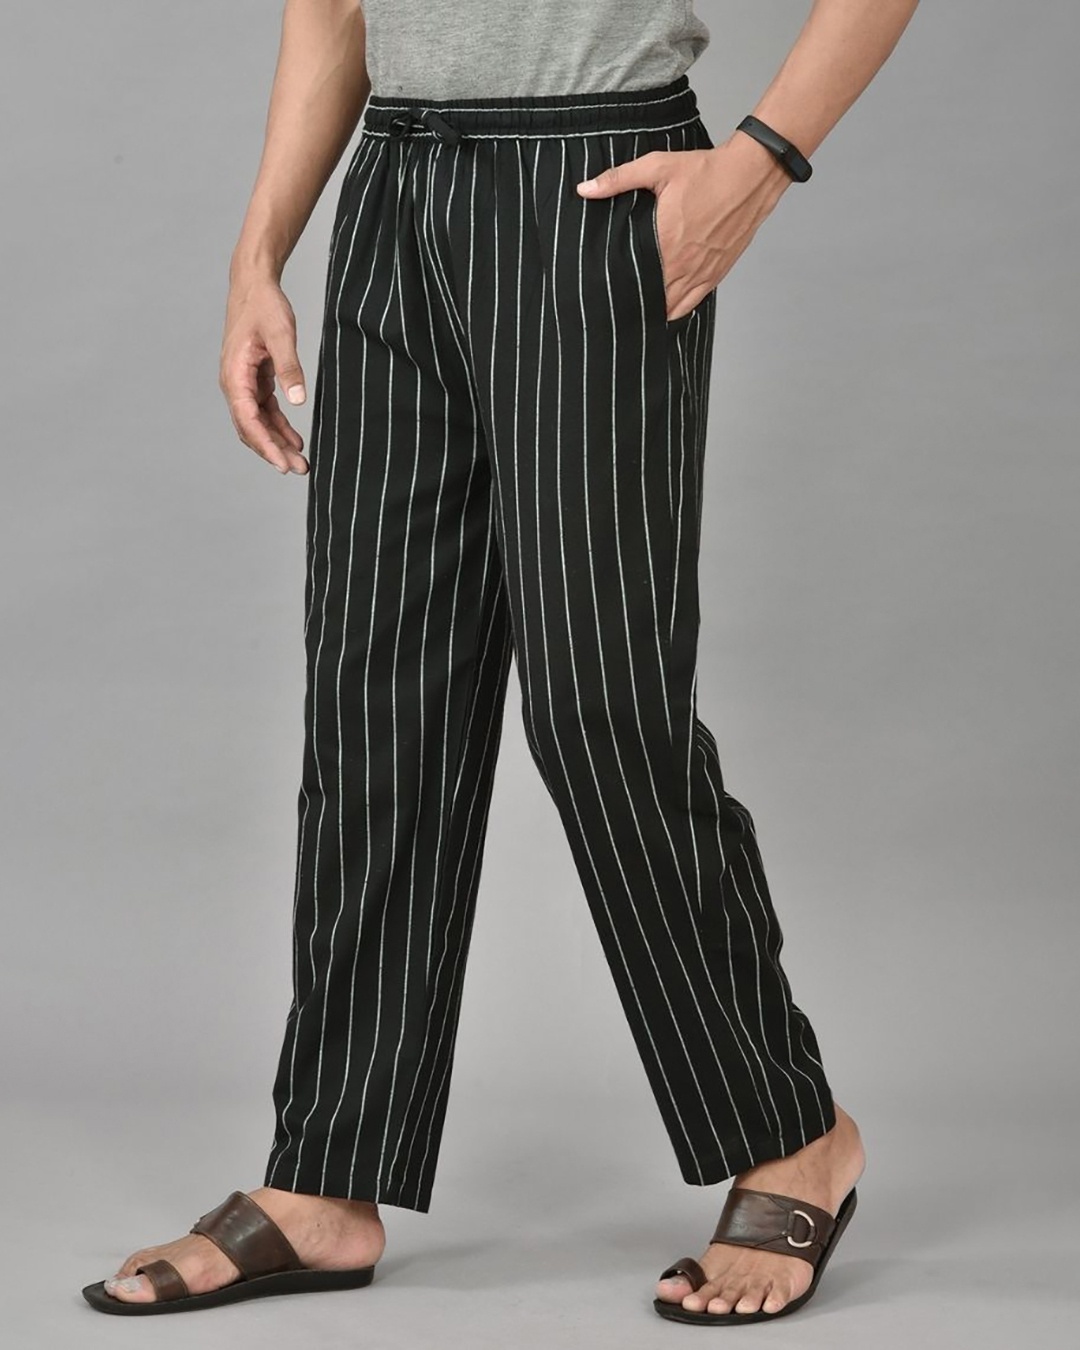 Striped Trouser Pants Women Trousers Semi Formals